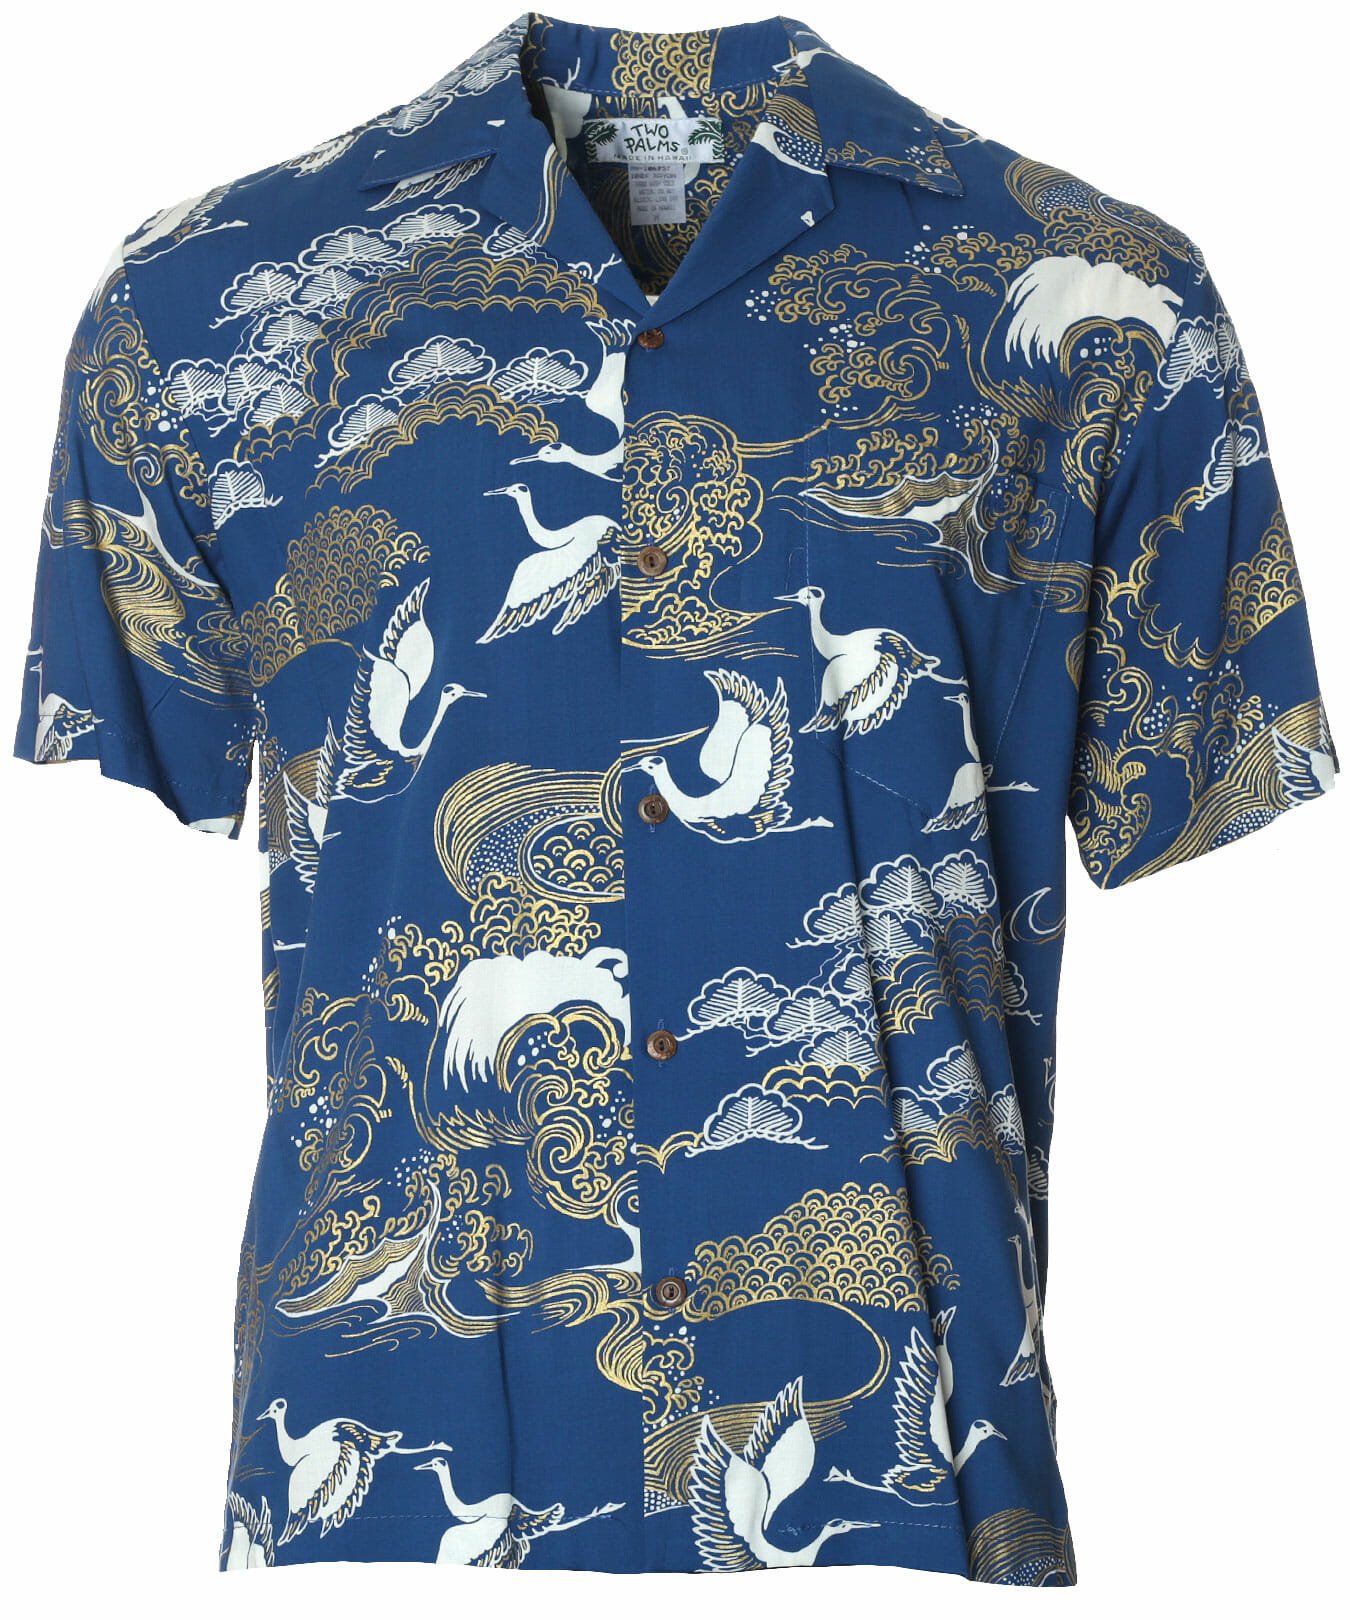 Men's Rayon Tropical Shirt